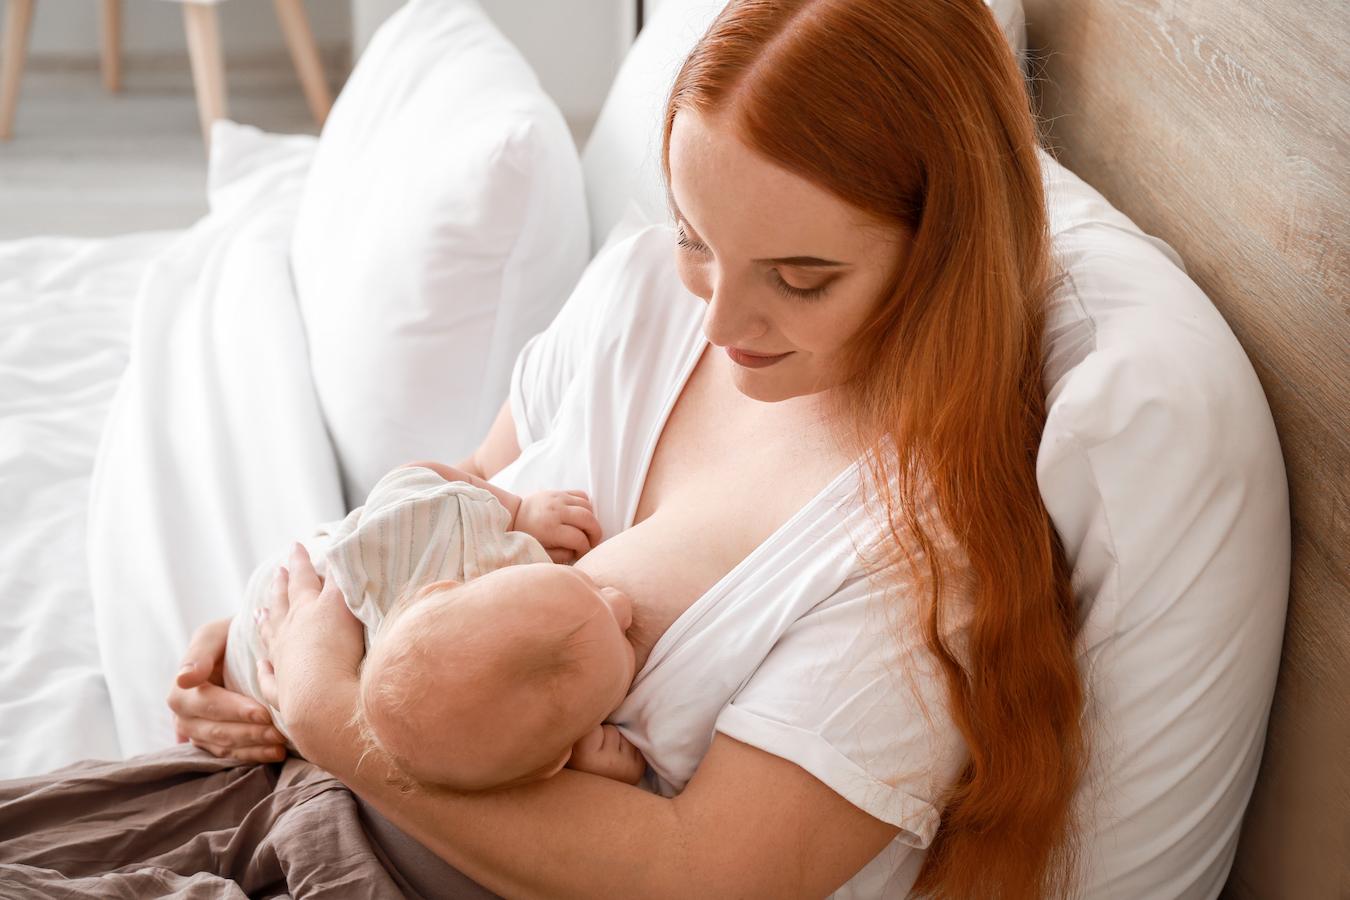 Women breast mothers baby mother baby nursing babies child breastfeed express milk breastfeeding transgender